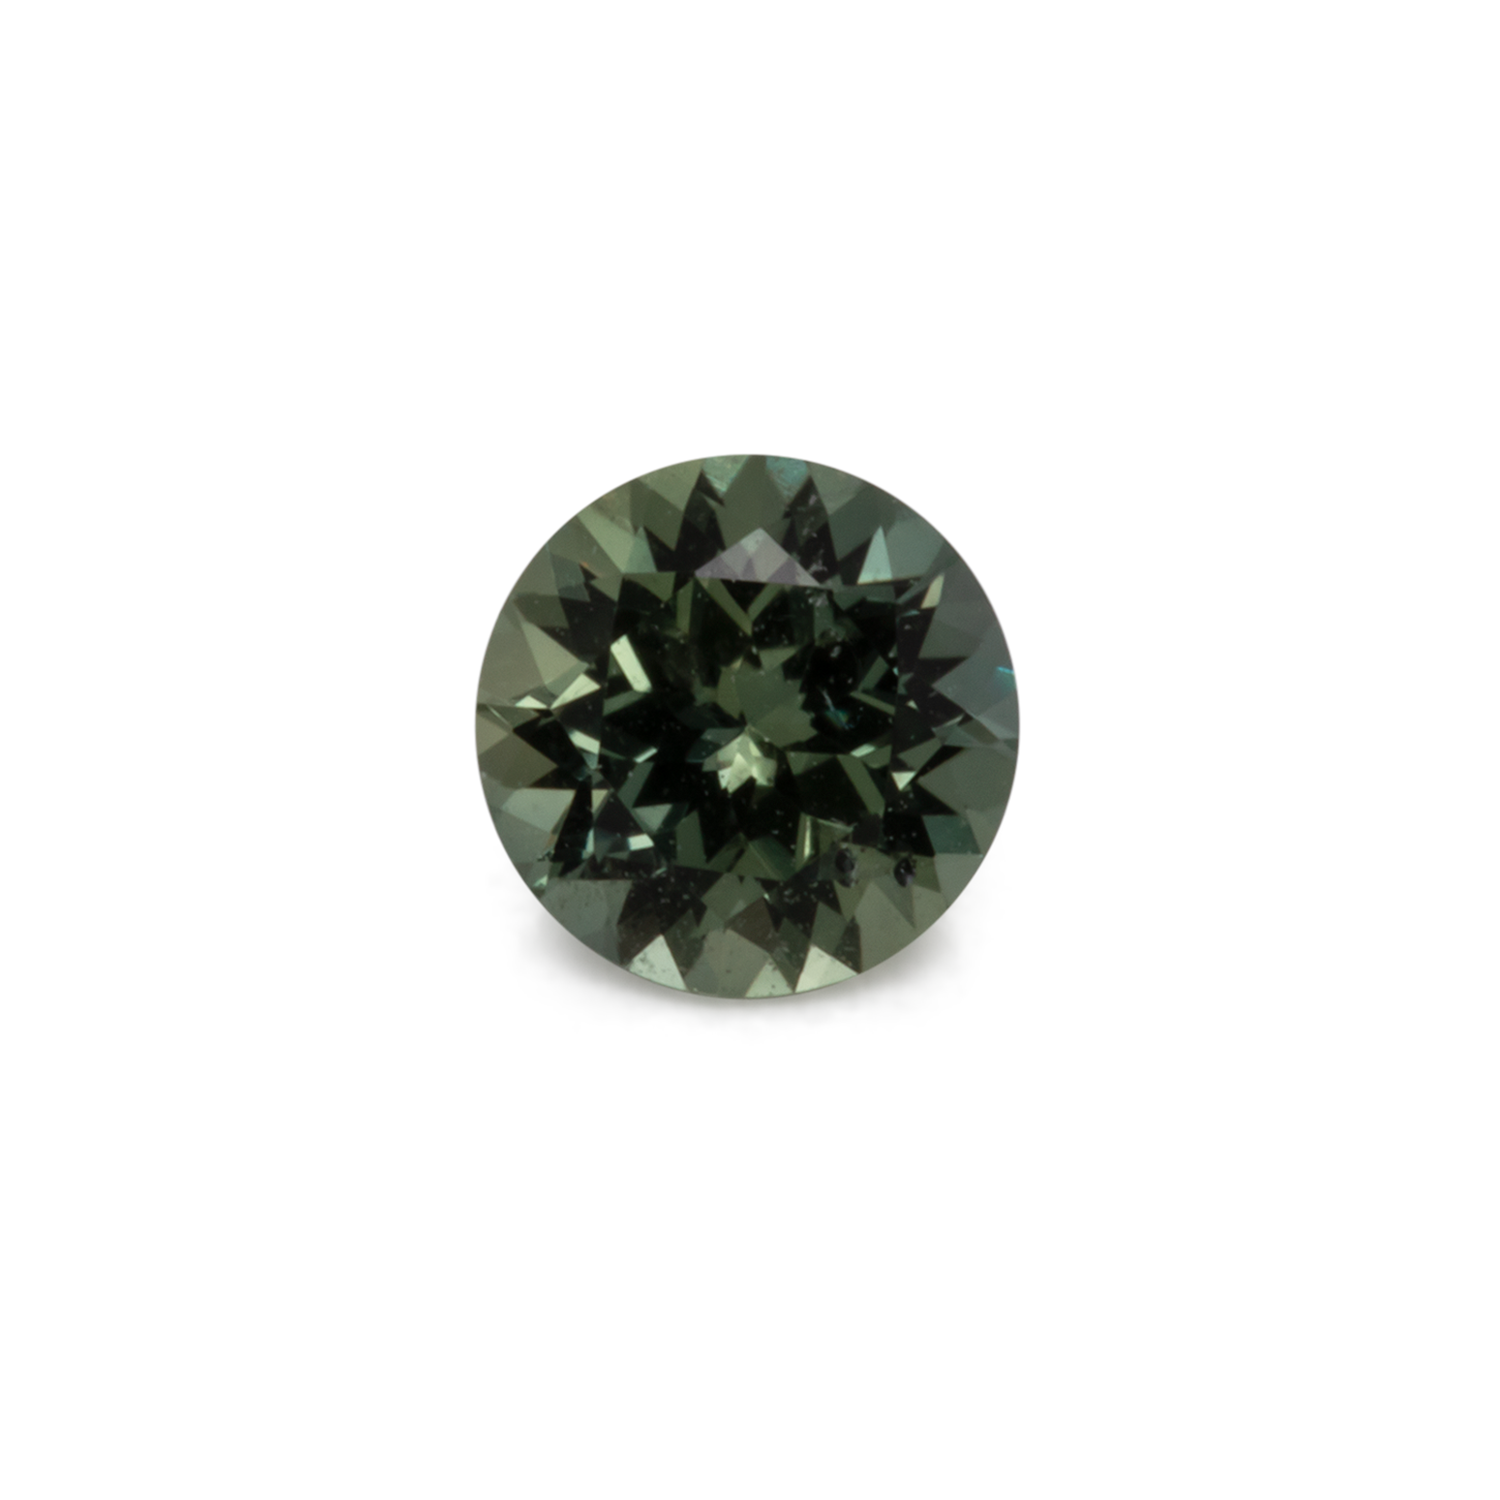 Sapphire - green, round, 4.1x4.1 mm, 0.32 cts, No. XSR11227